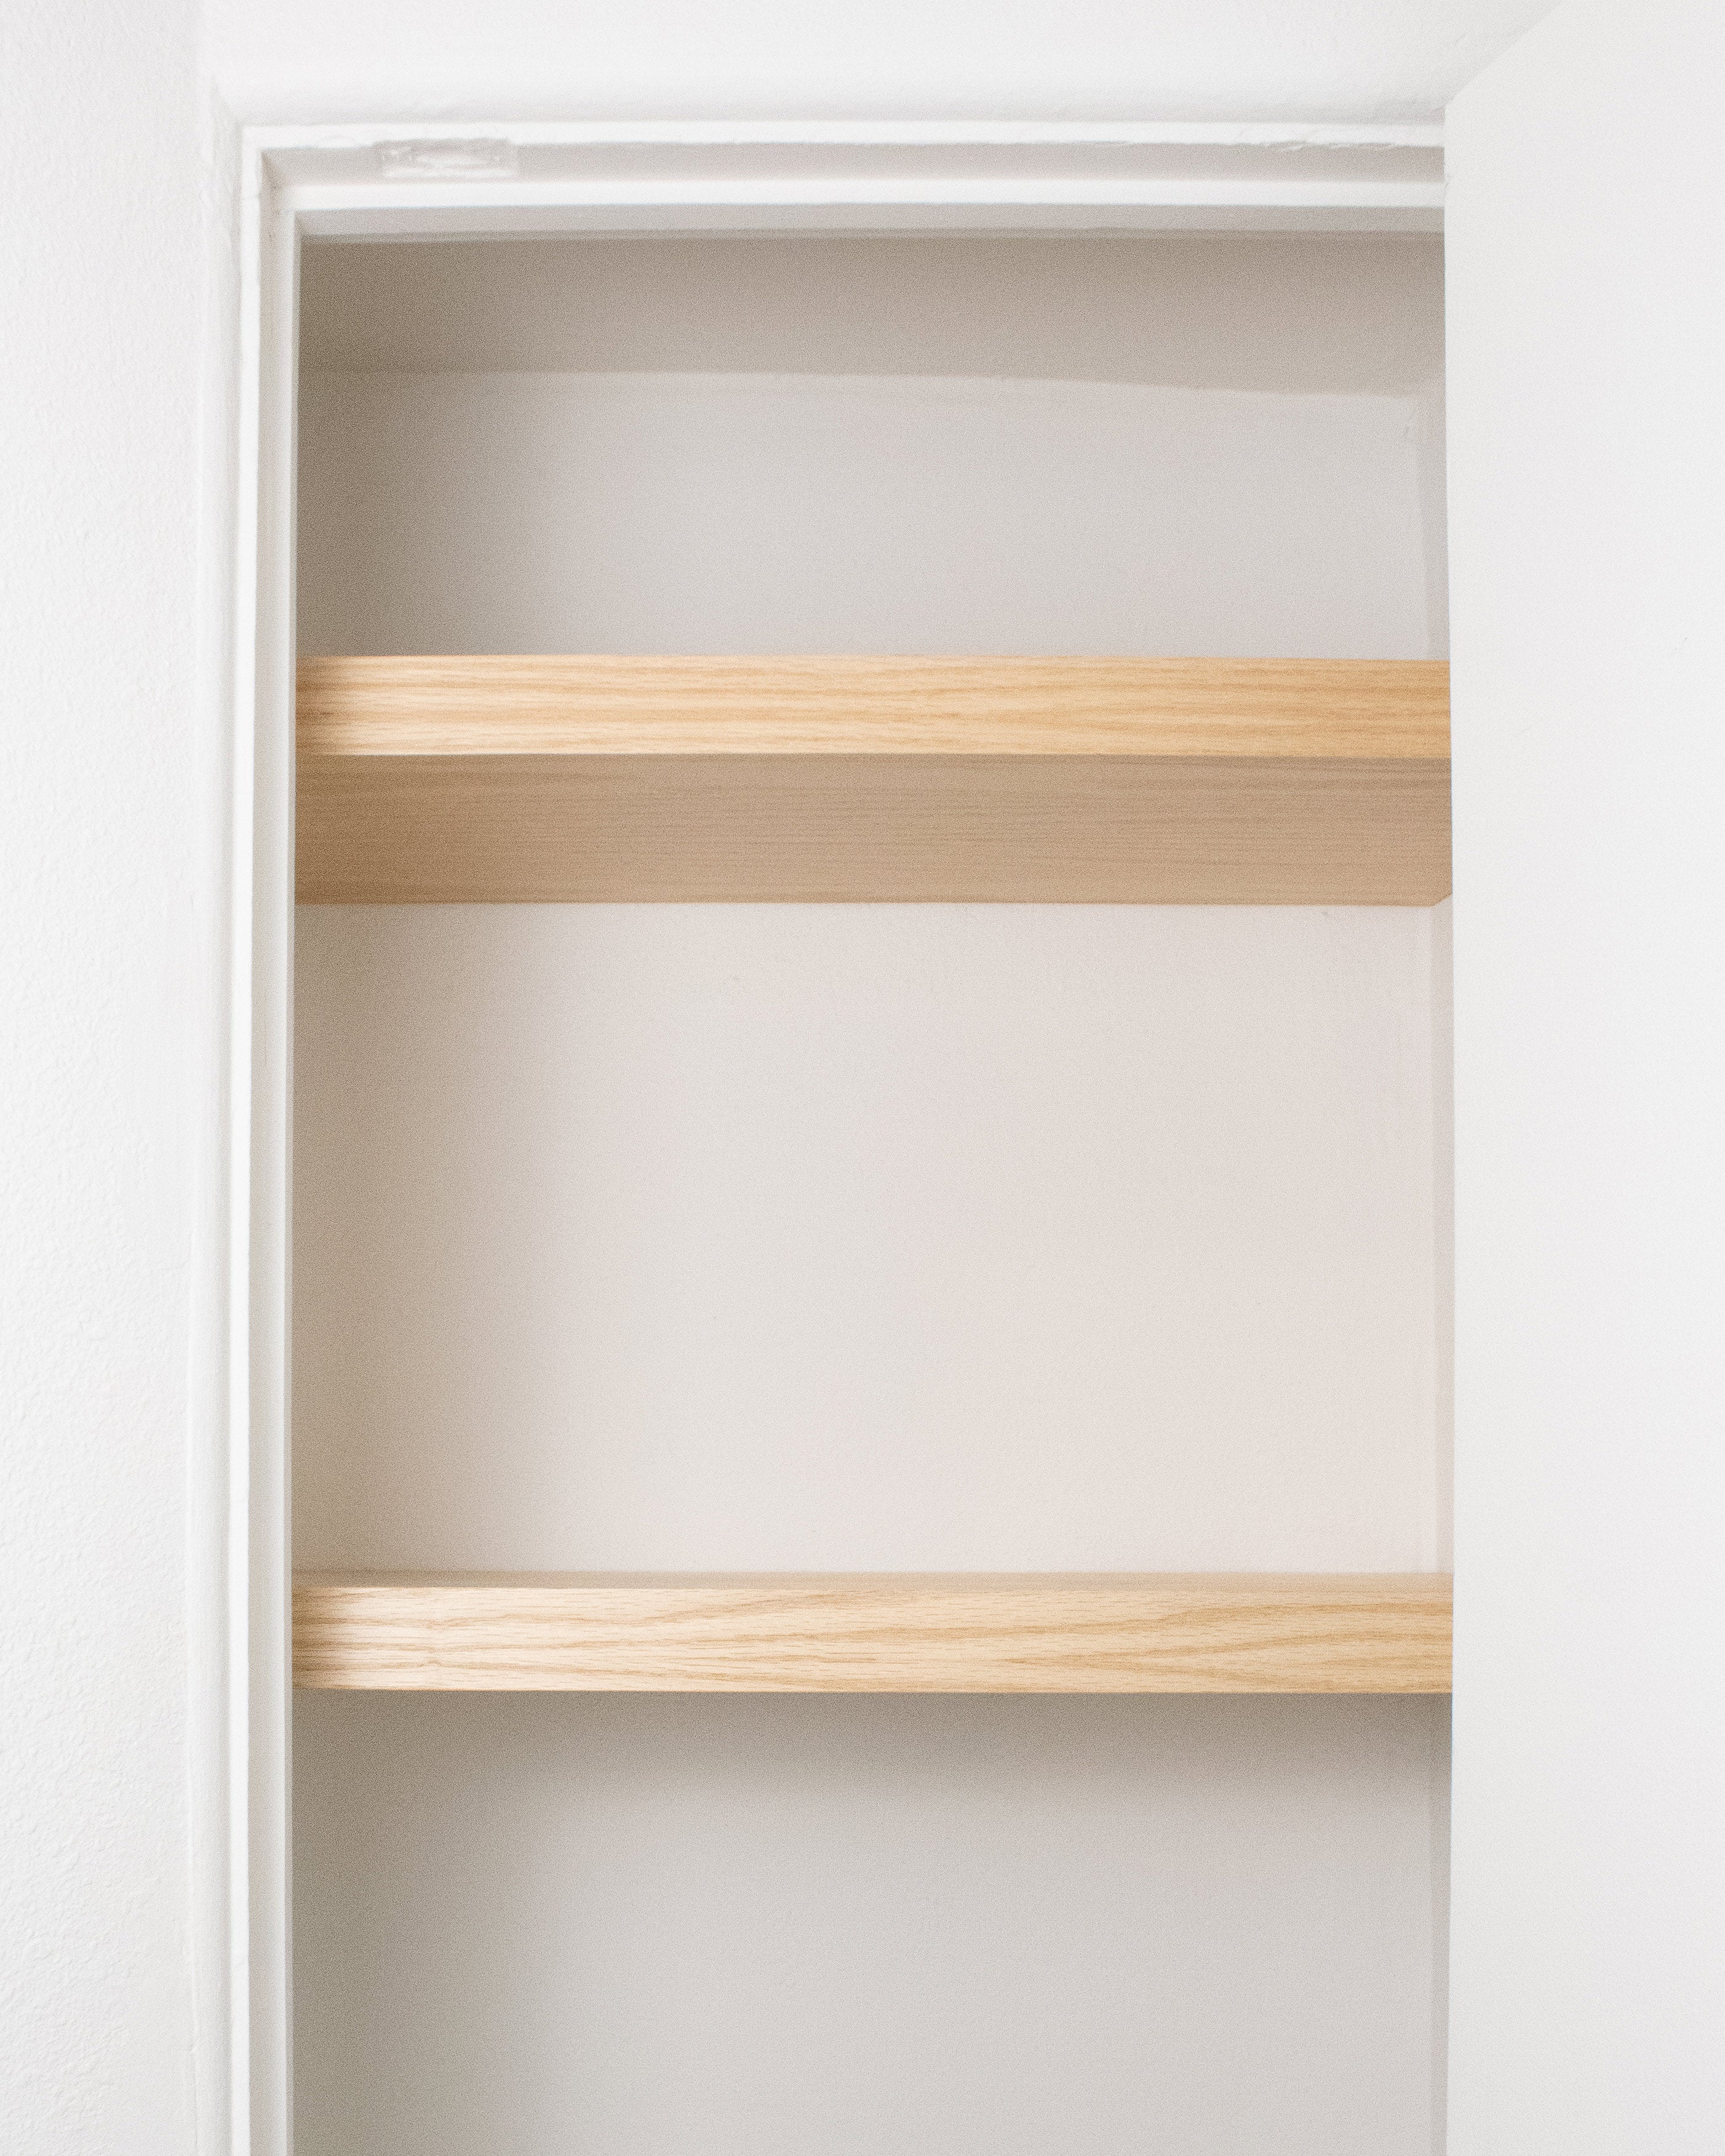 Red Oak 1.75" thick Cabinet Top / Slab Shelf